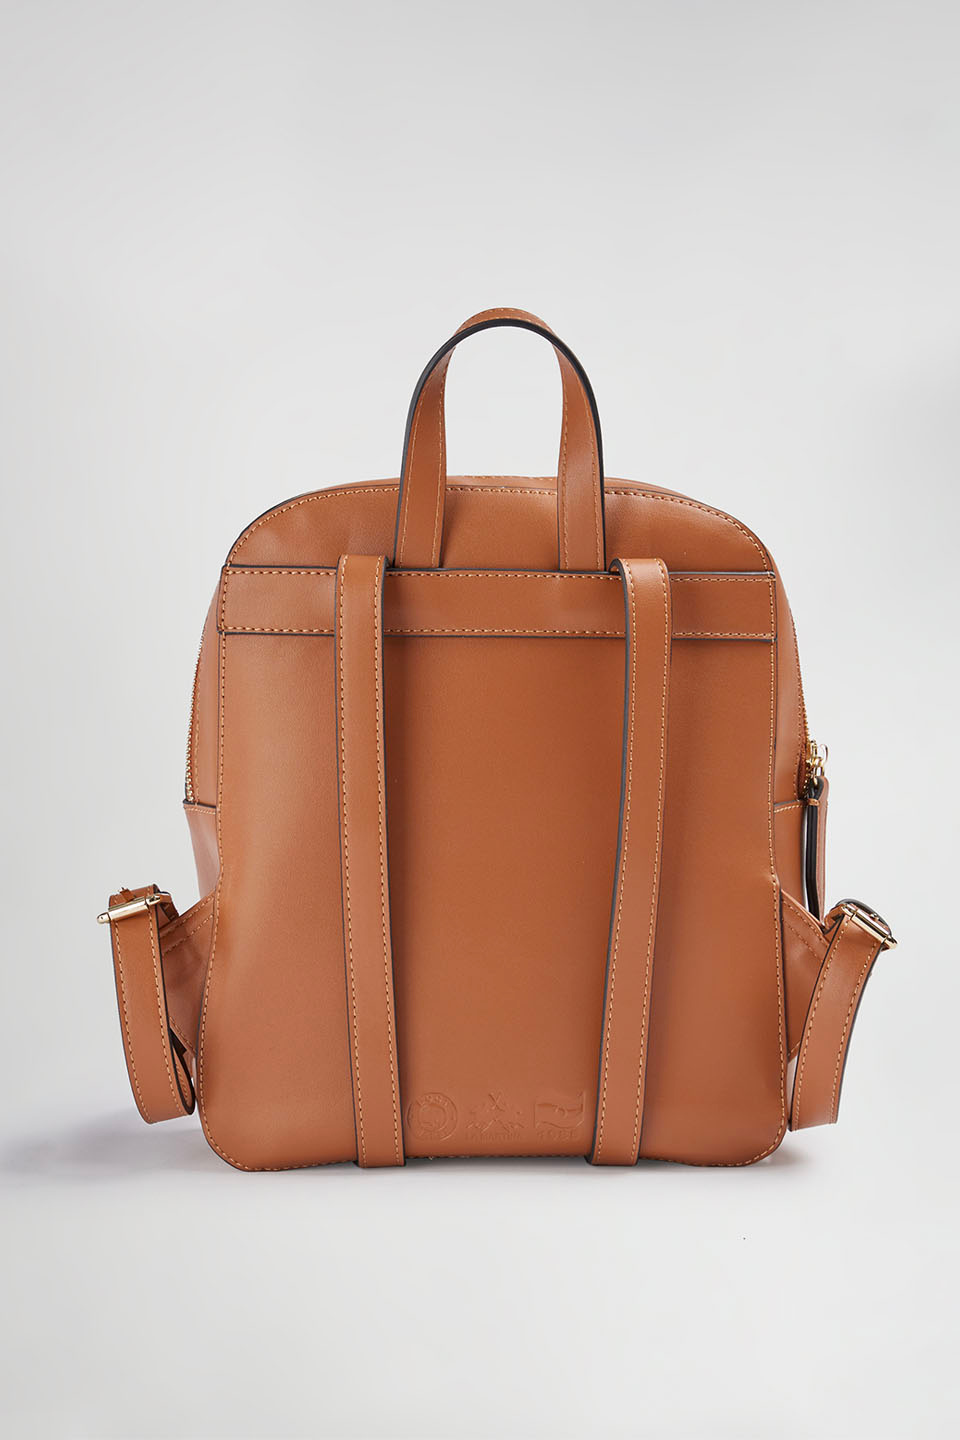 PU leather backpack - La Martina - Official Online Shop